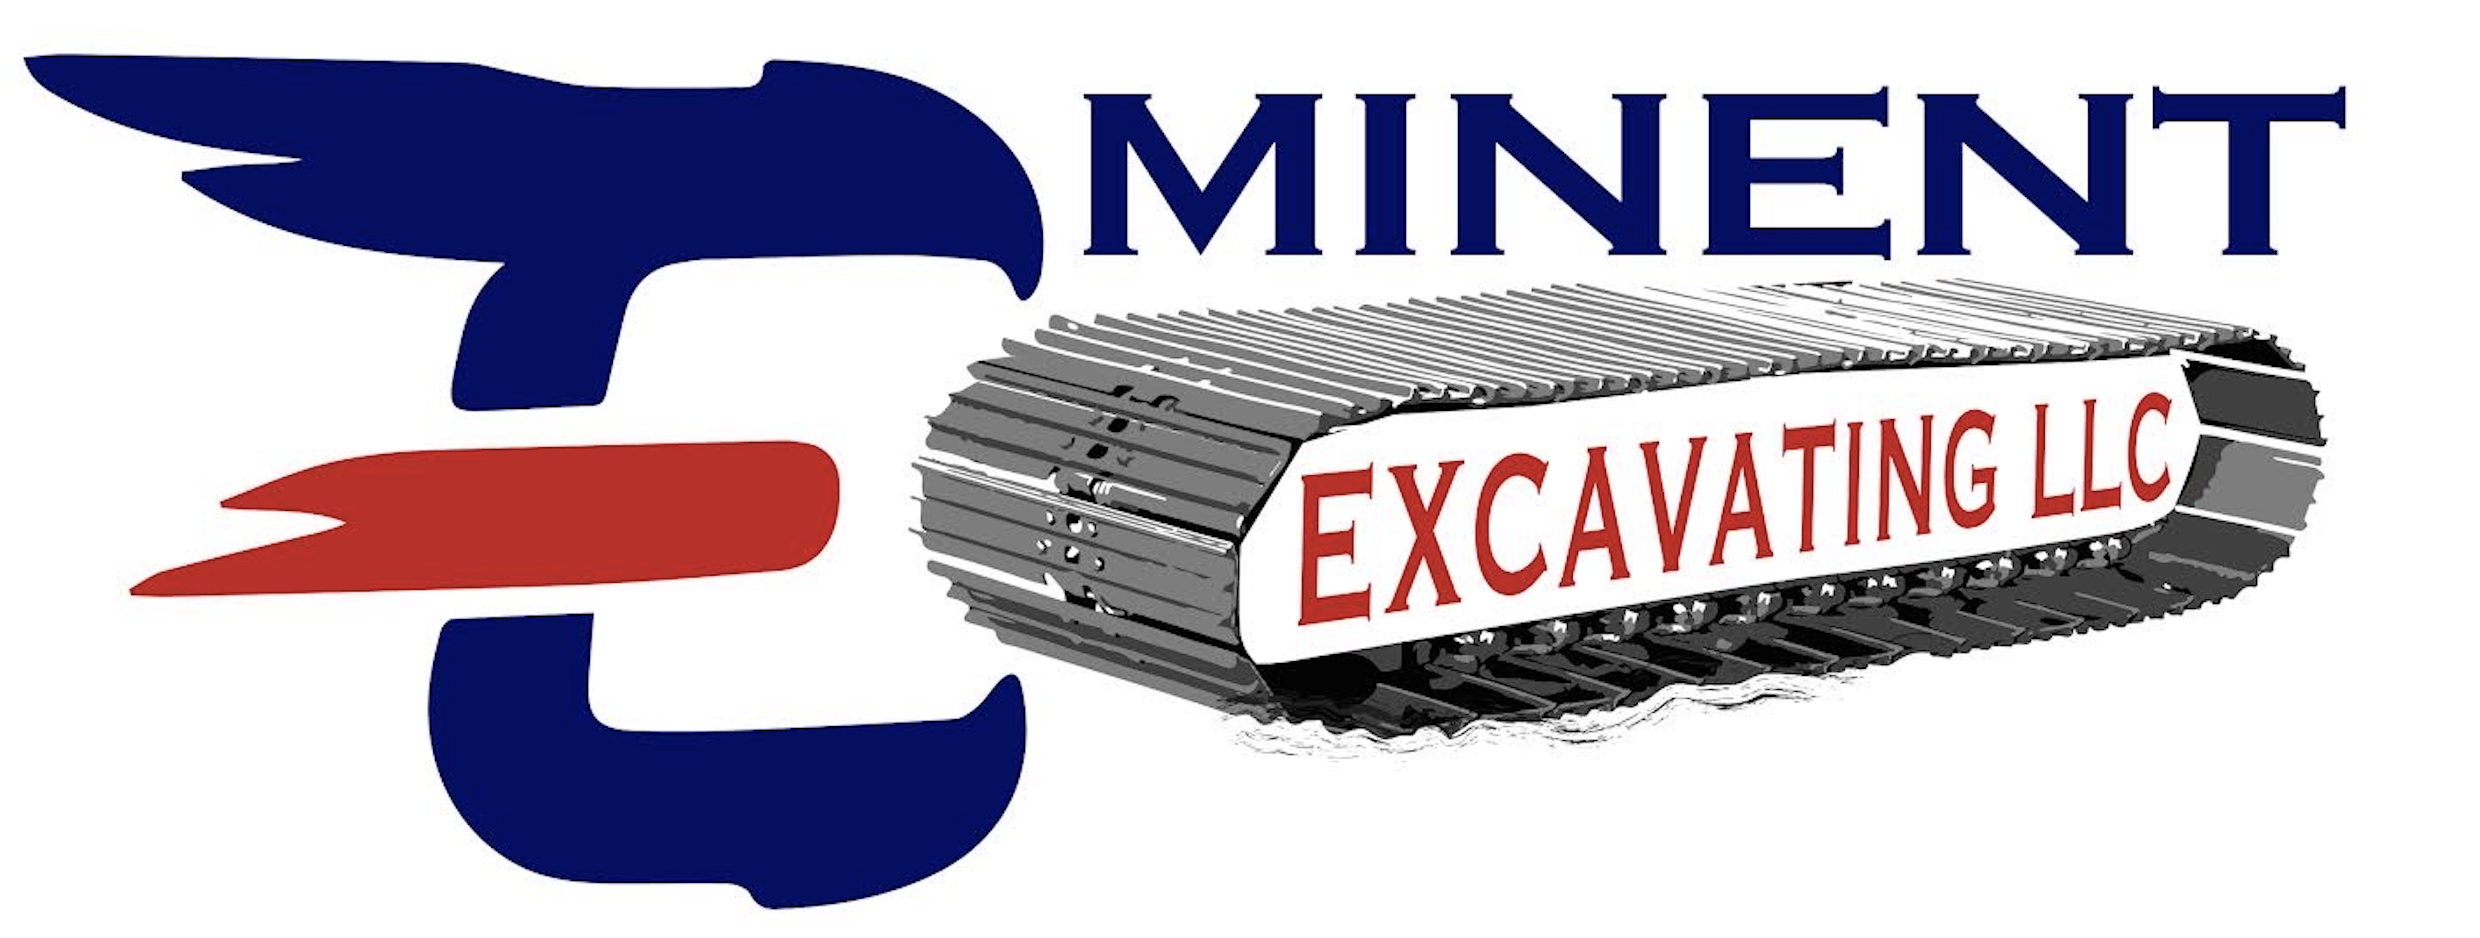 Eminent Excavating, LLC Logo